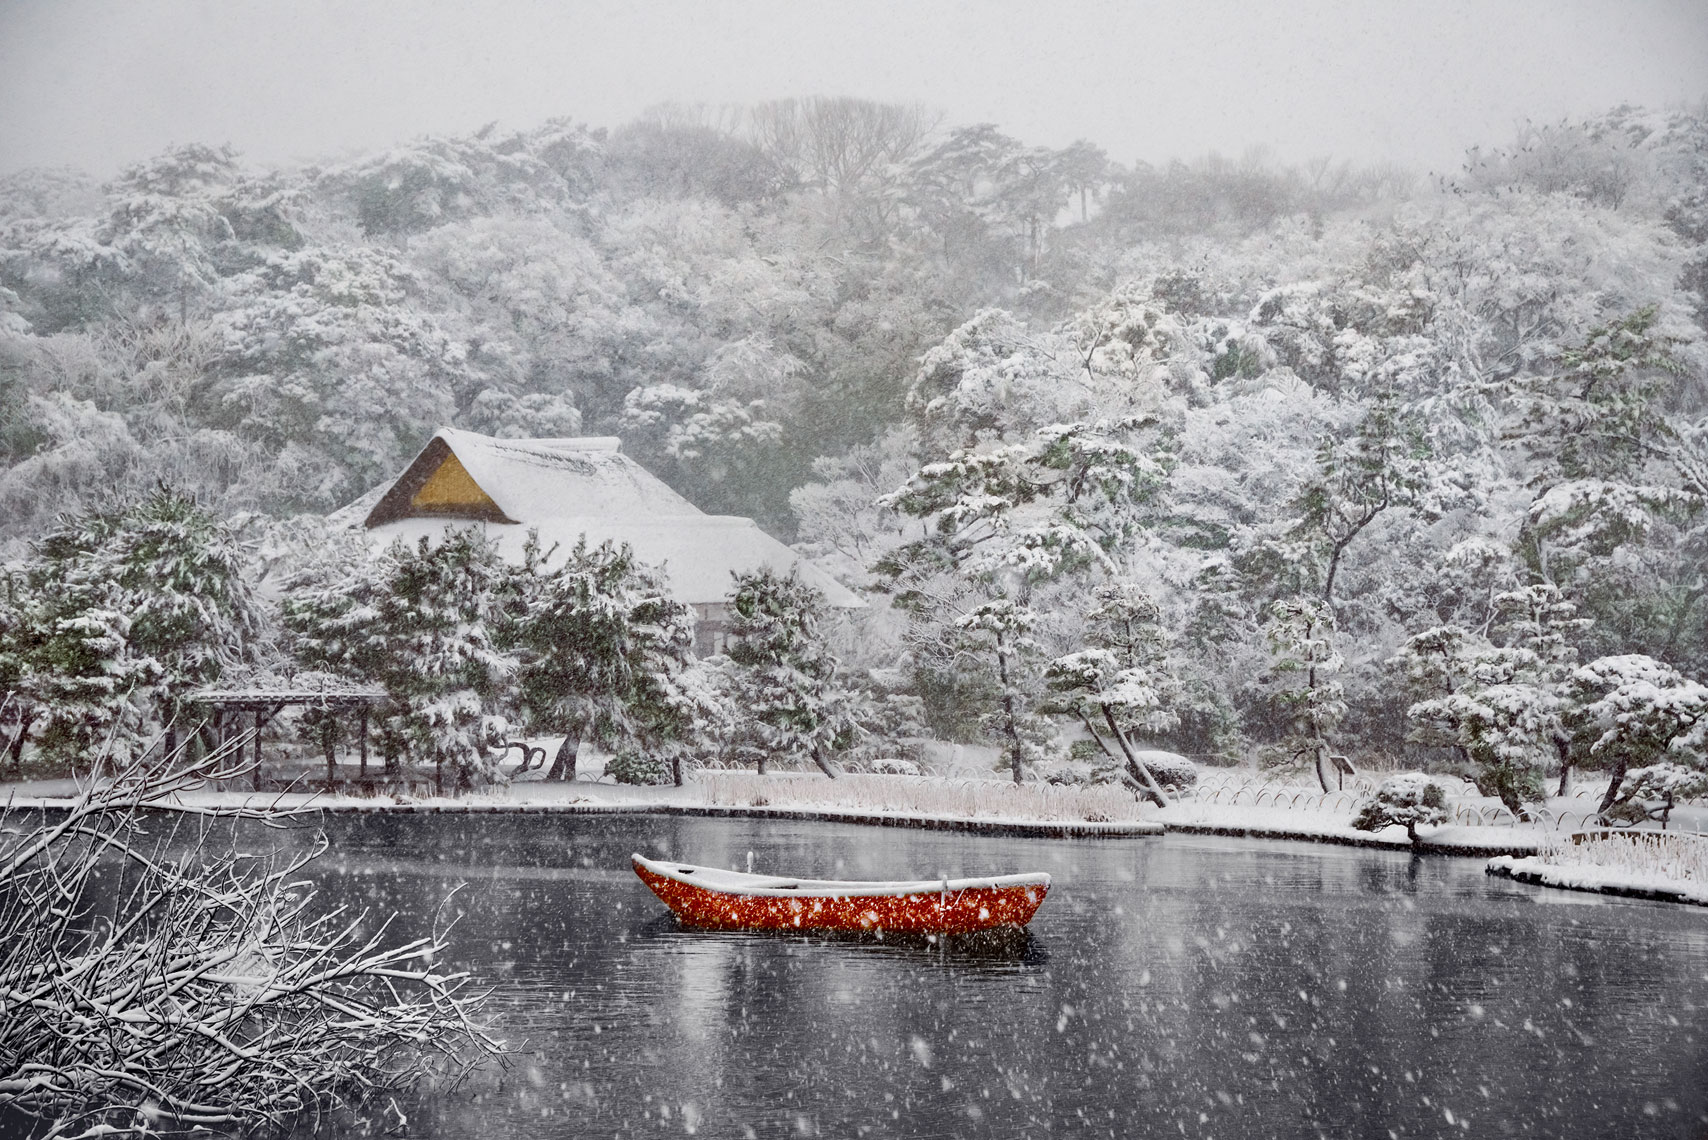 Boat Covered in Snow in Sankei-en Gardens. Yokohama, Japan, 2014.